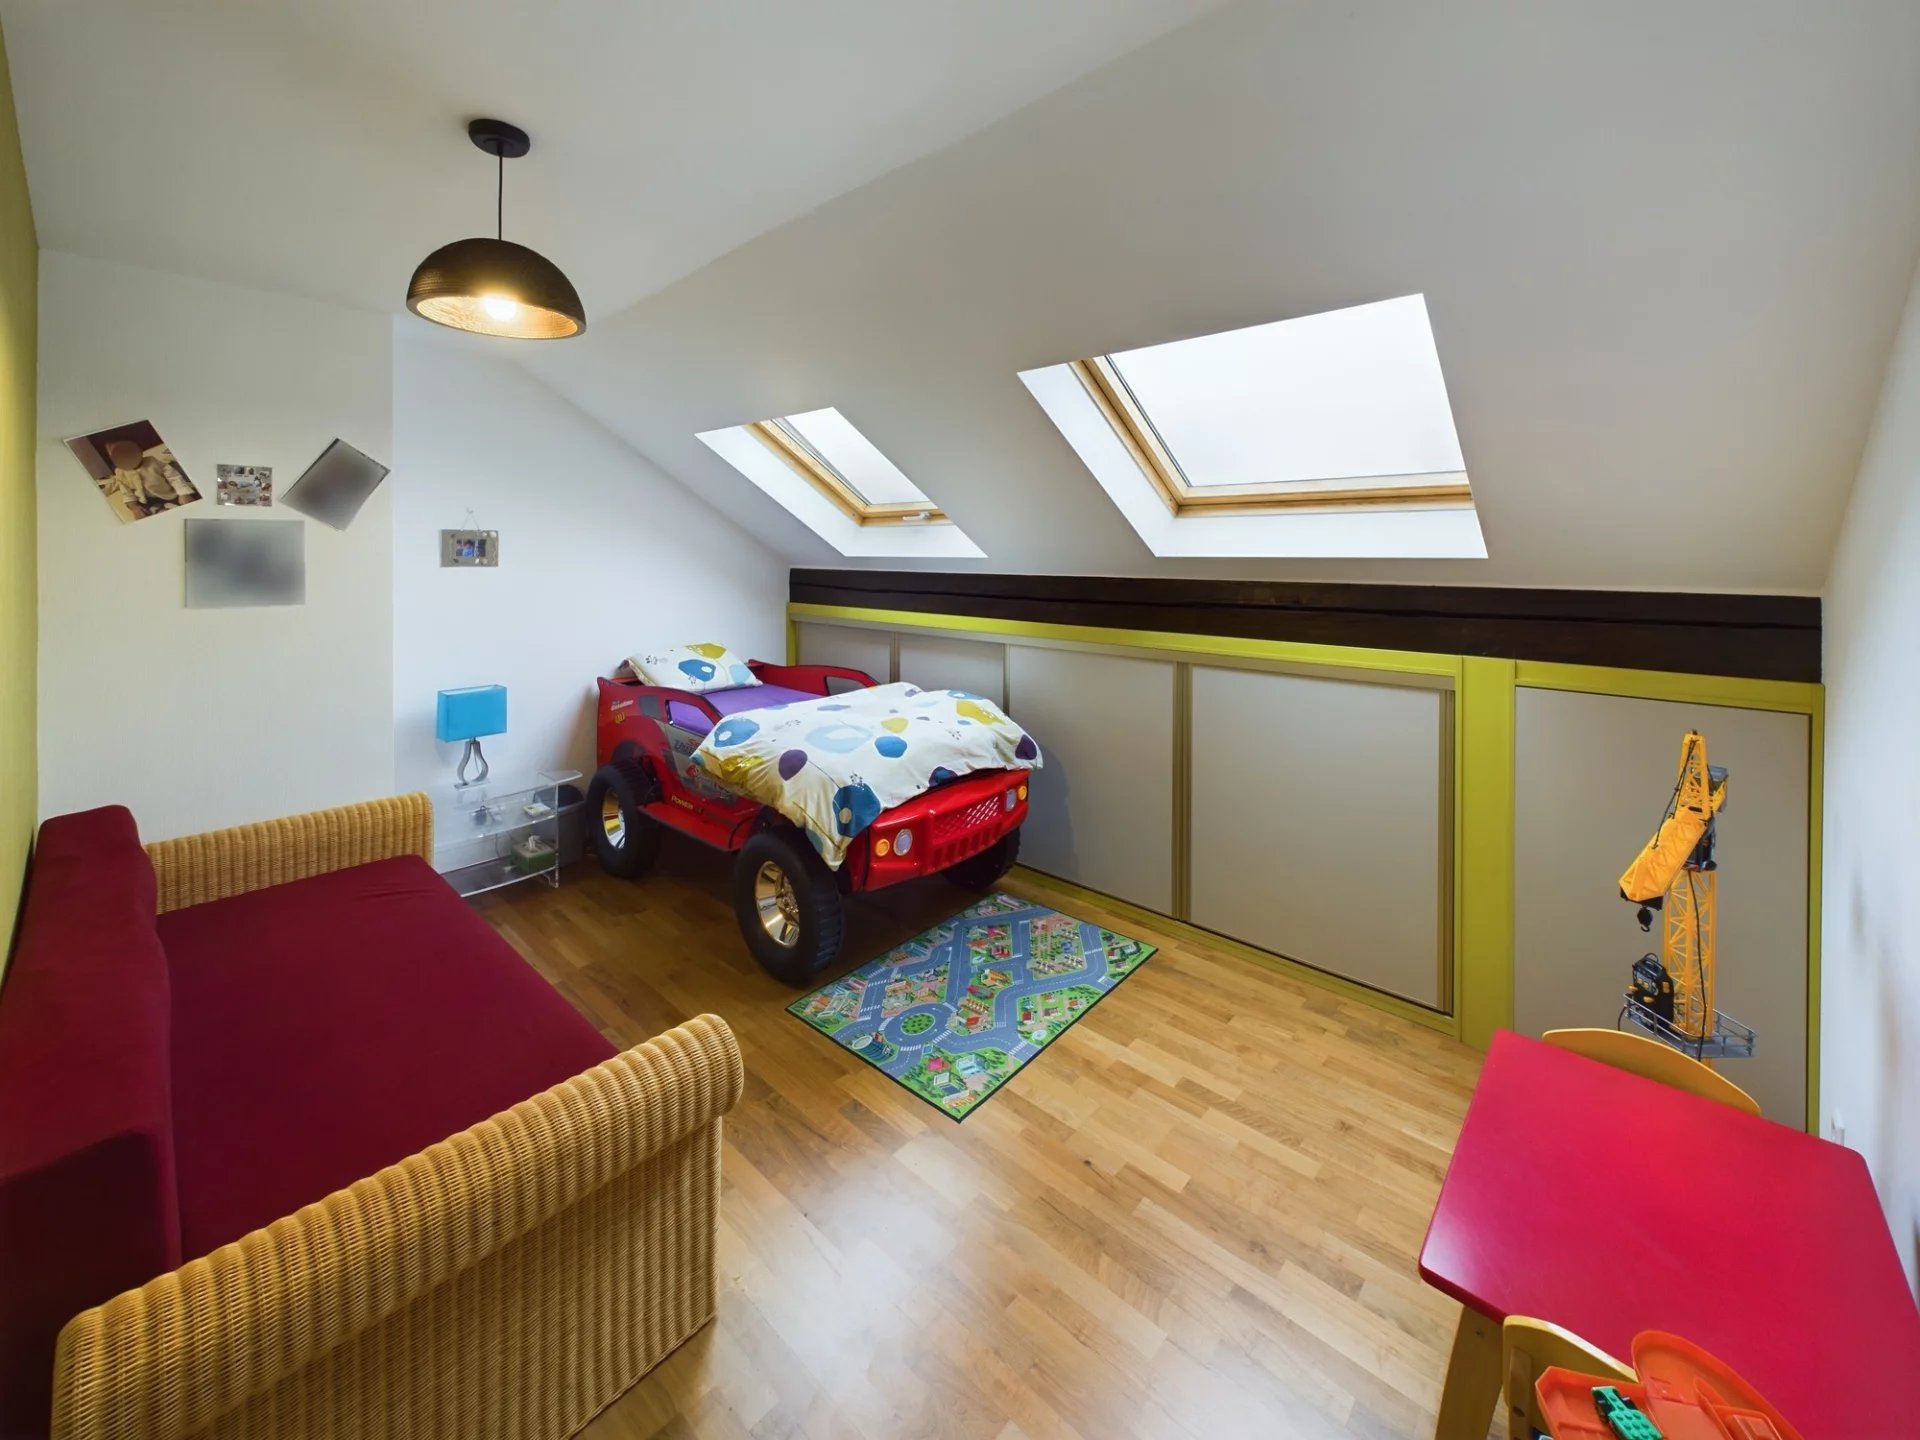 3-bedroom dupelx apartement for sale in Bergem